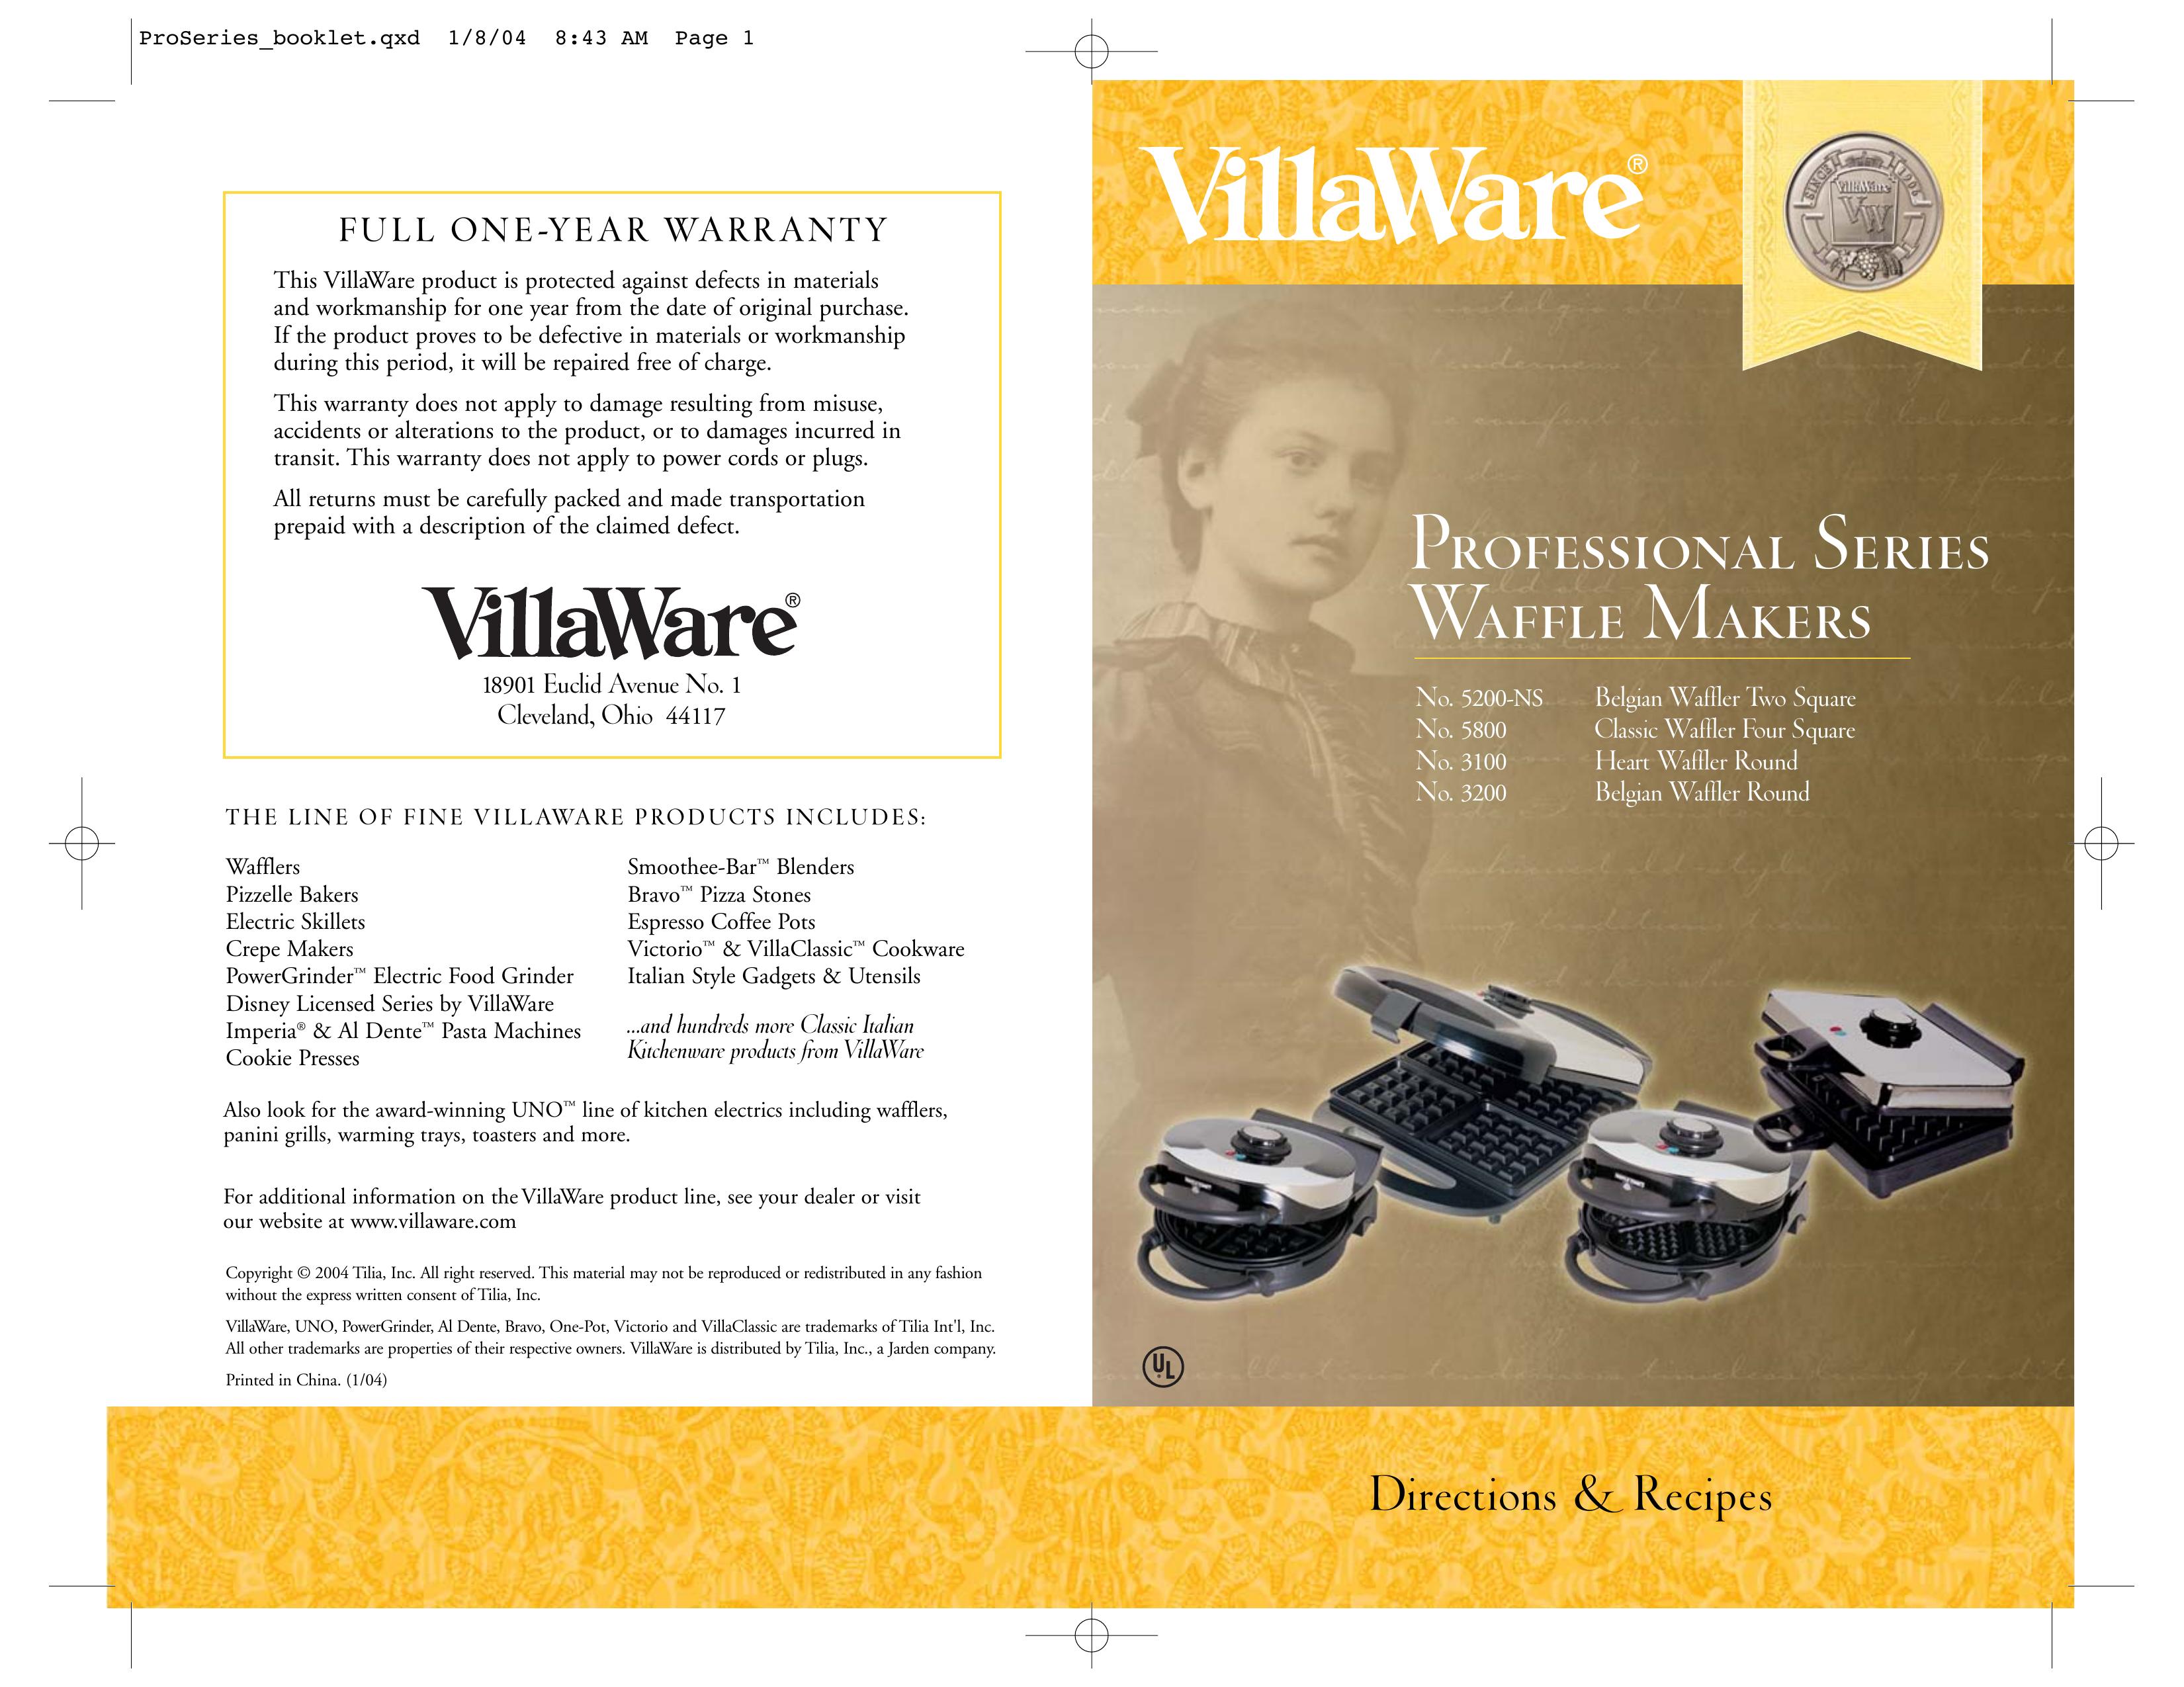 Villaware 3100 Waffle Iron User Manual